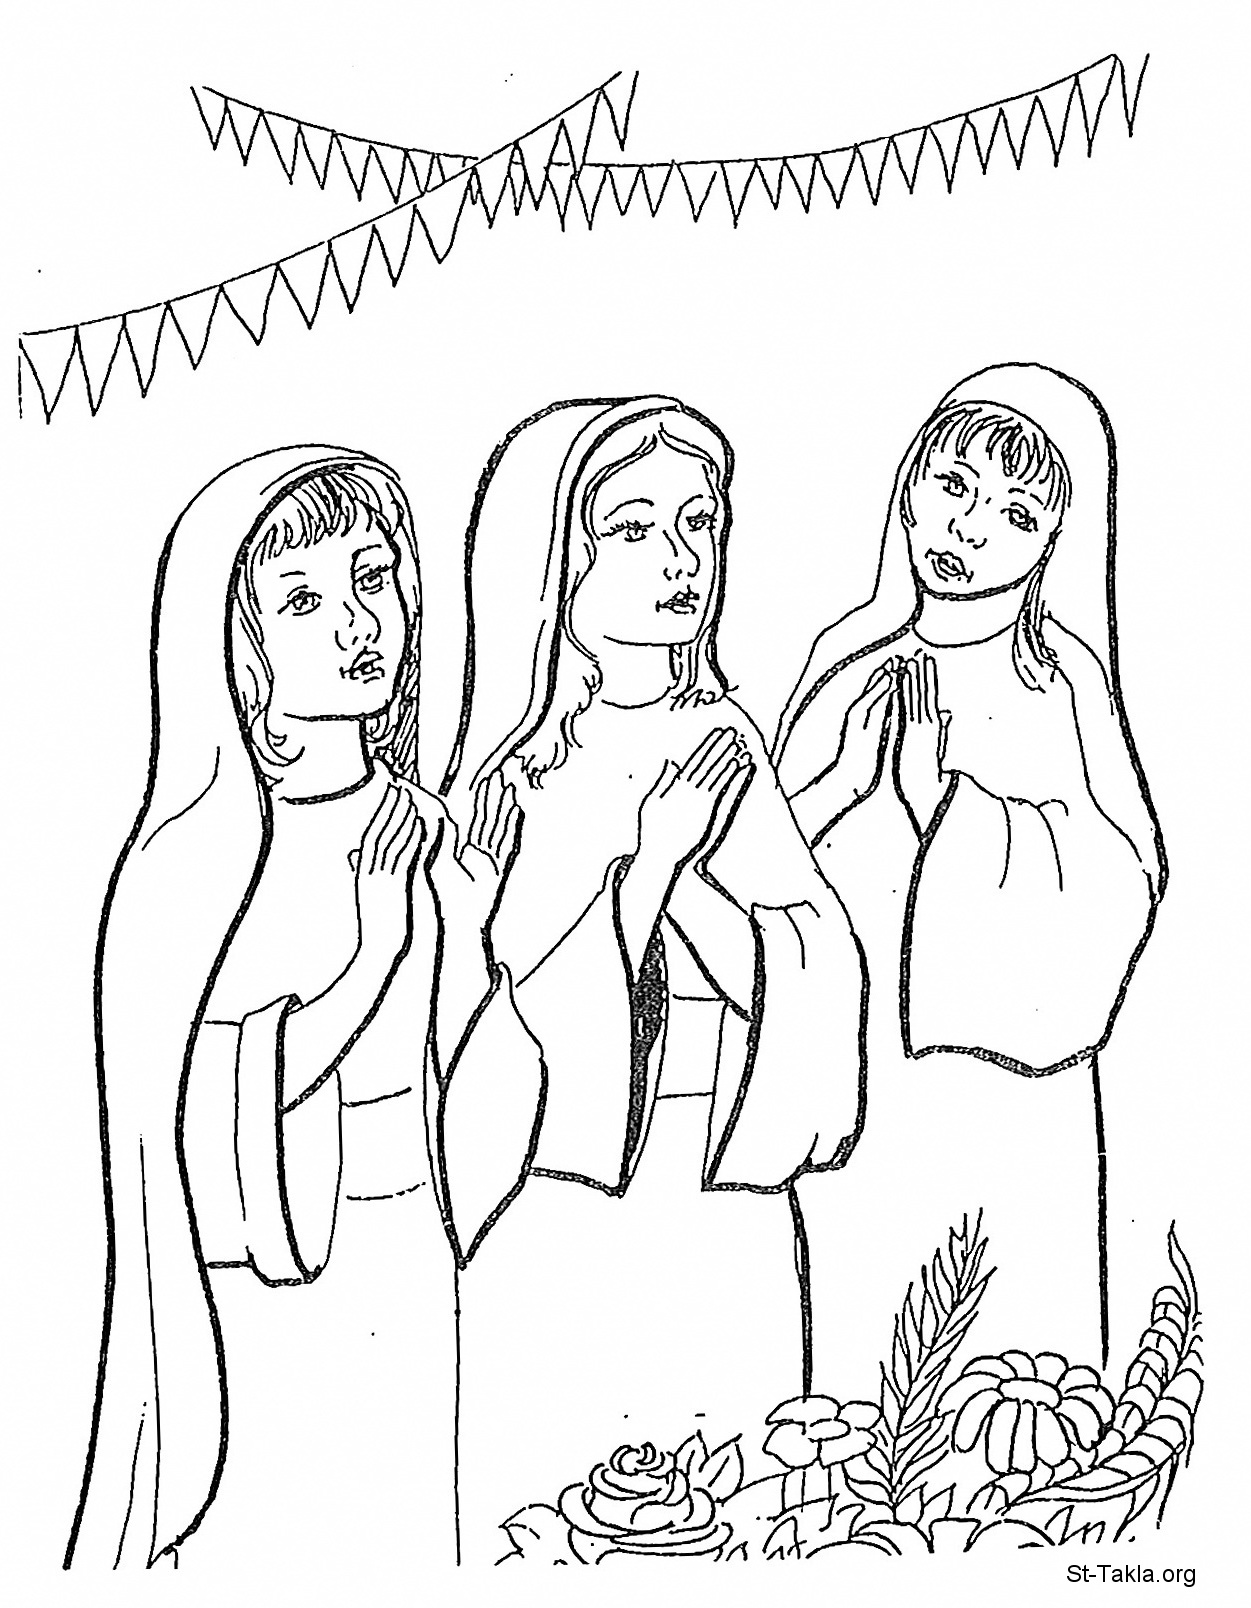 St-Takla.org Image: Three young women, wedding celebration, happiness, thankful     :  ʡ    () ͡ 